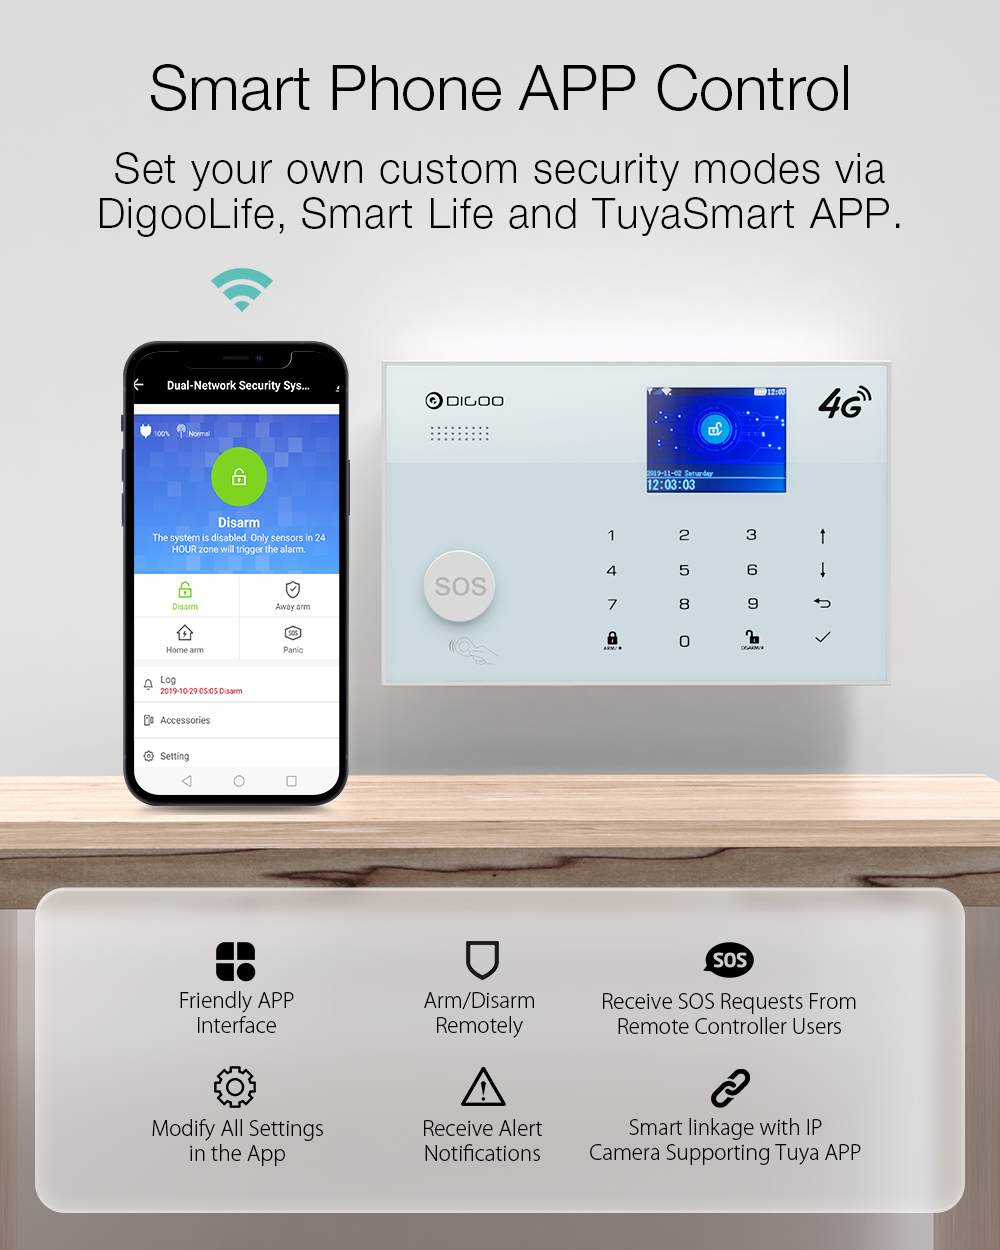 DIGOO DG-ZXG30 4G IOS Android 433MHz Wireless WIFI GSM RFID Card Smart Home Burglar Security Alarm Systems Kit Tuya APP Alert